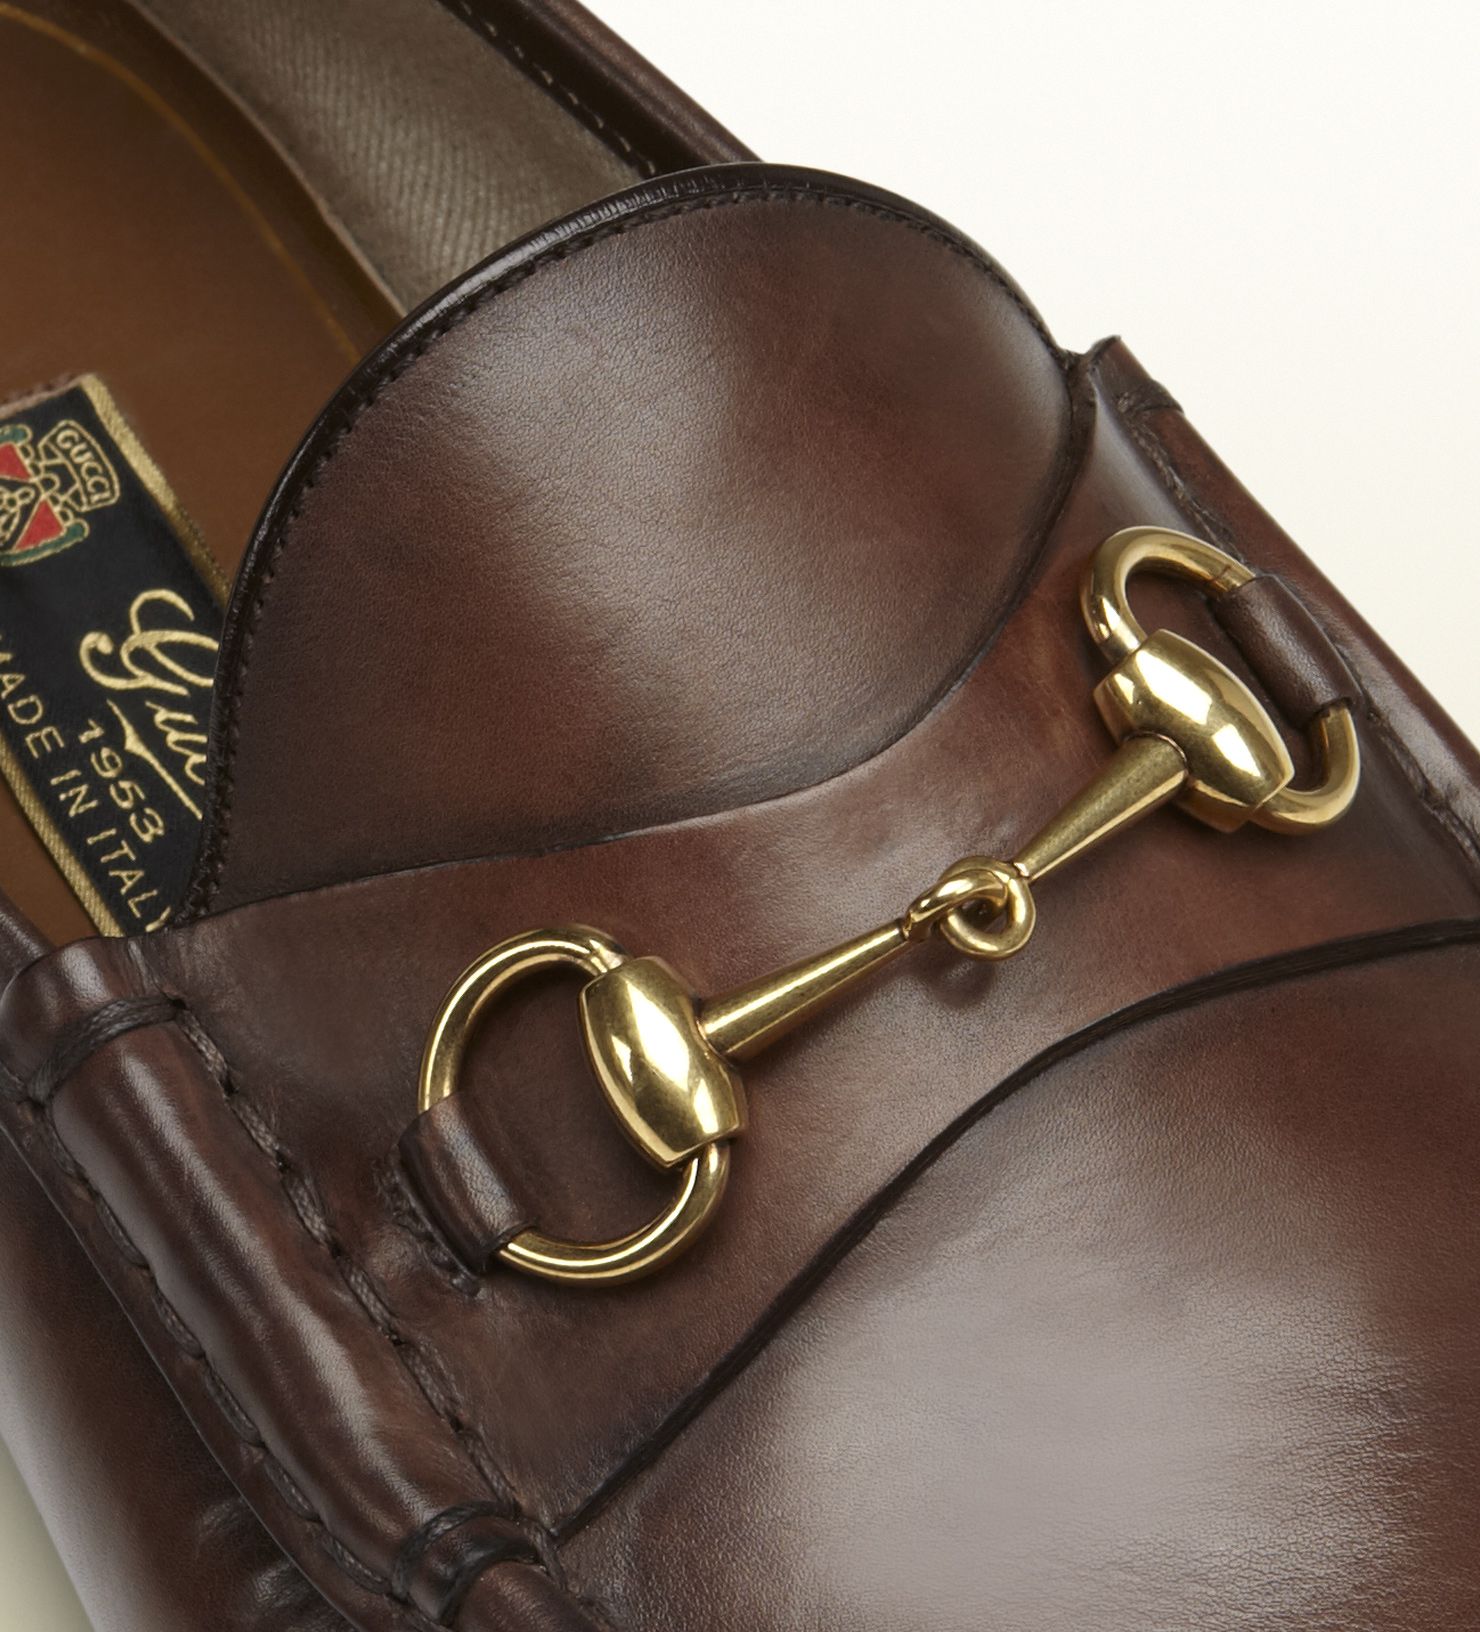 Gucci 1953 Horsebit loafer